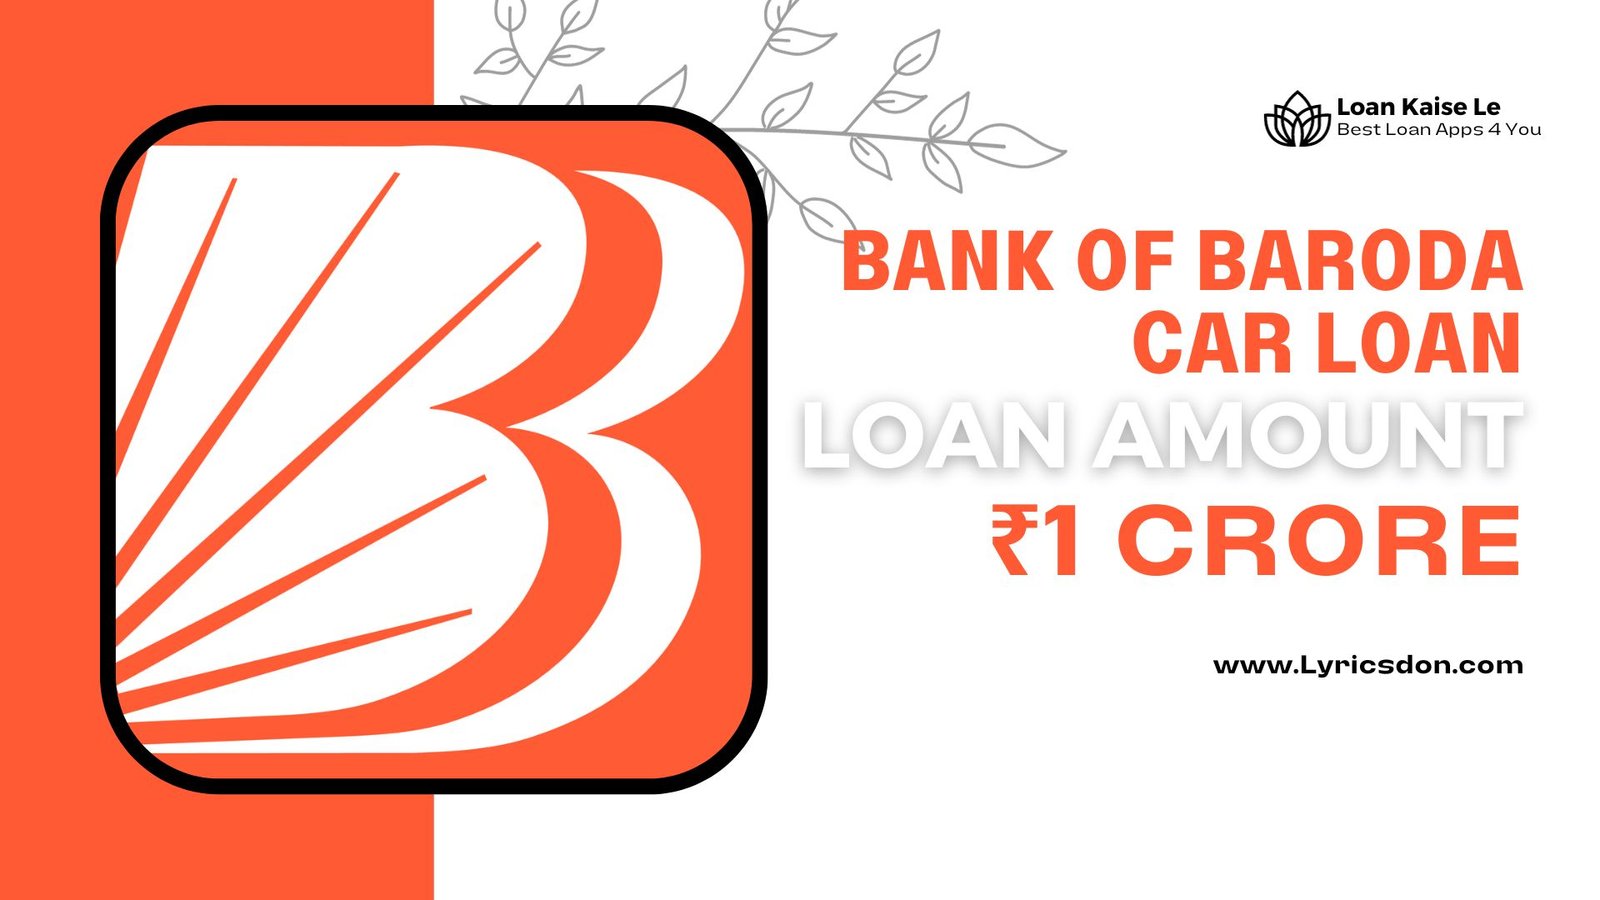 Bank Of Baroda New Car Loan Amount